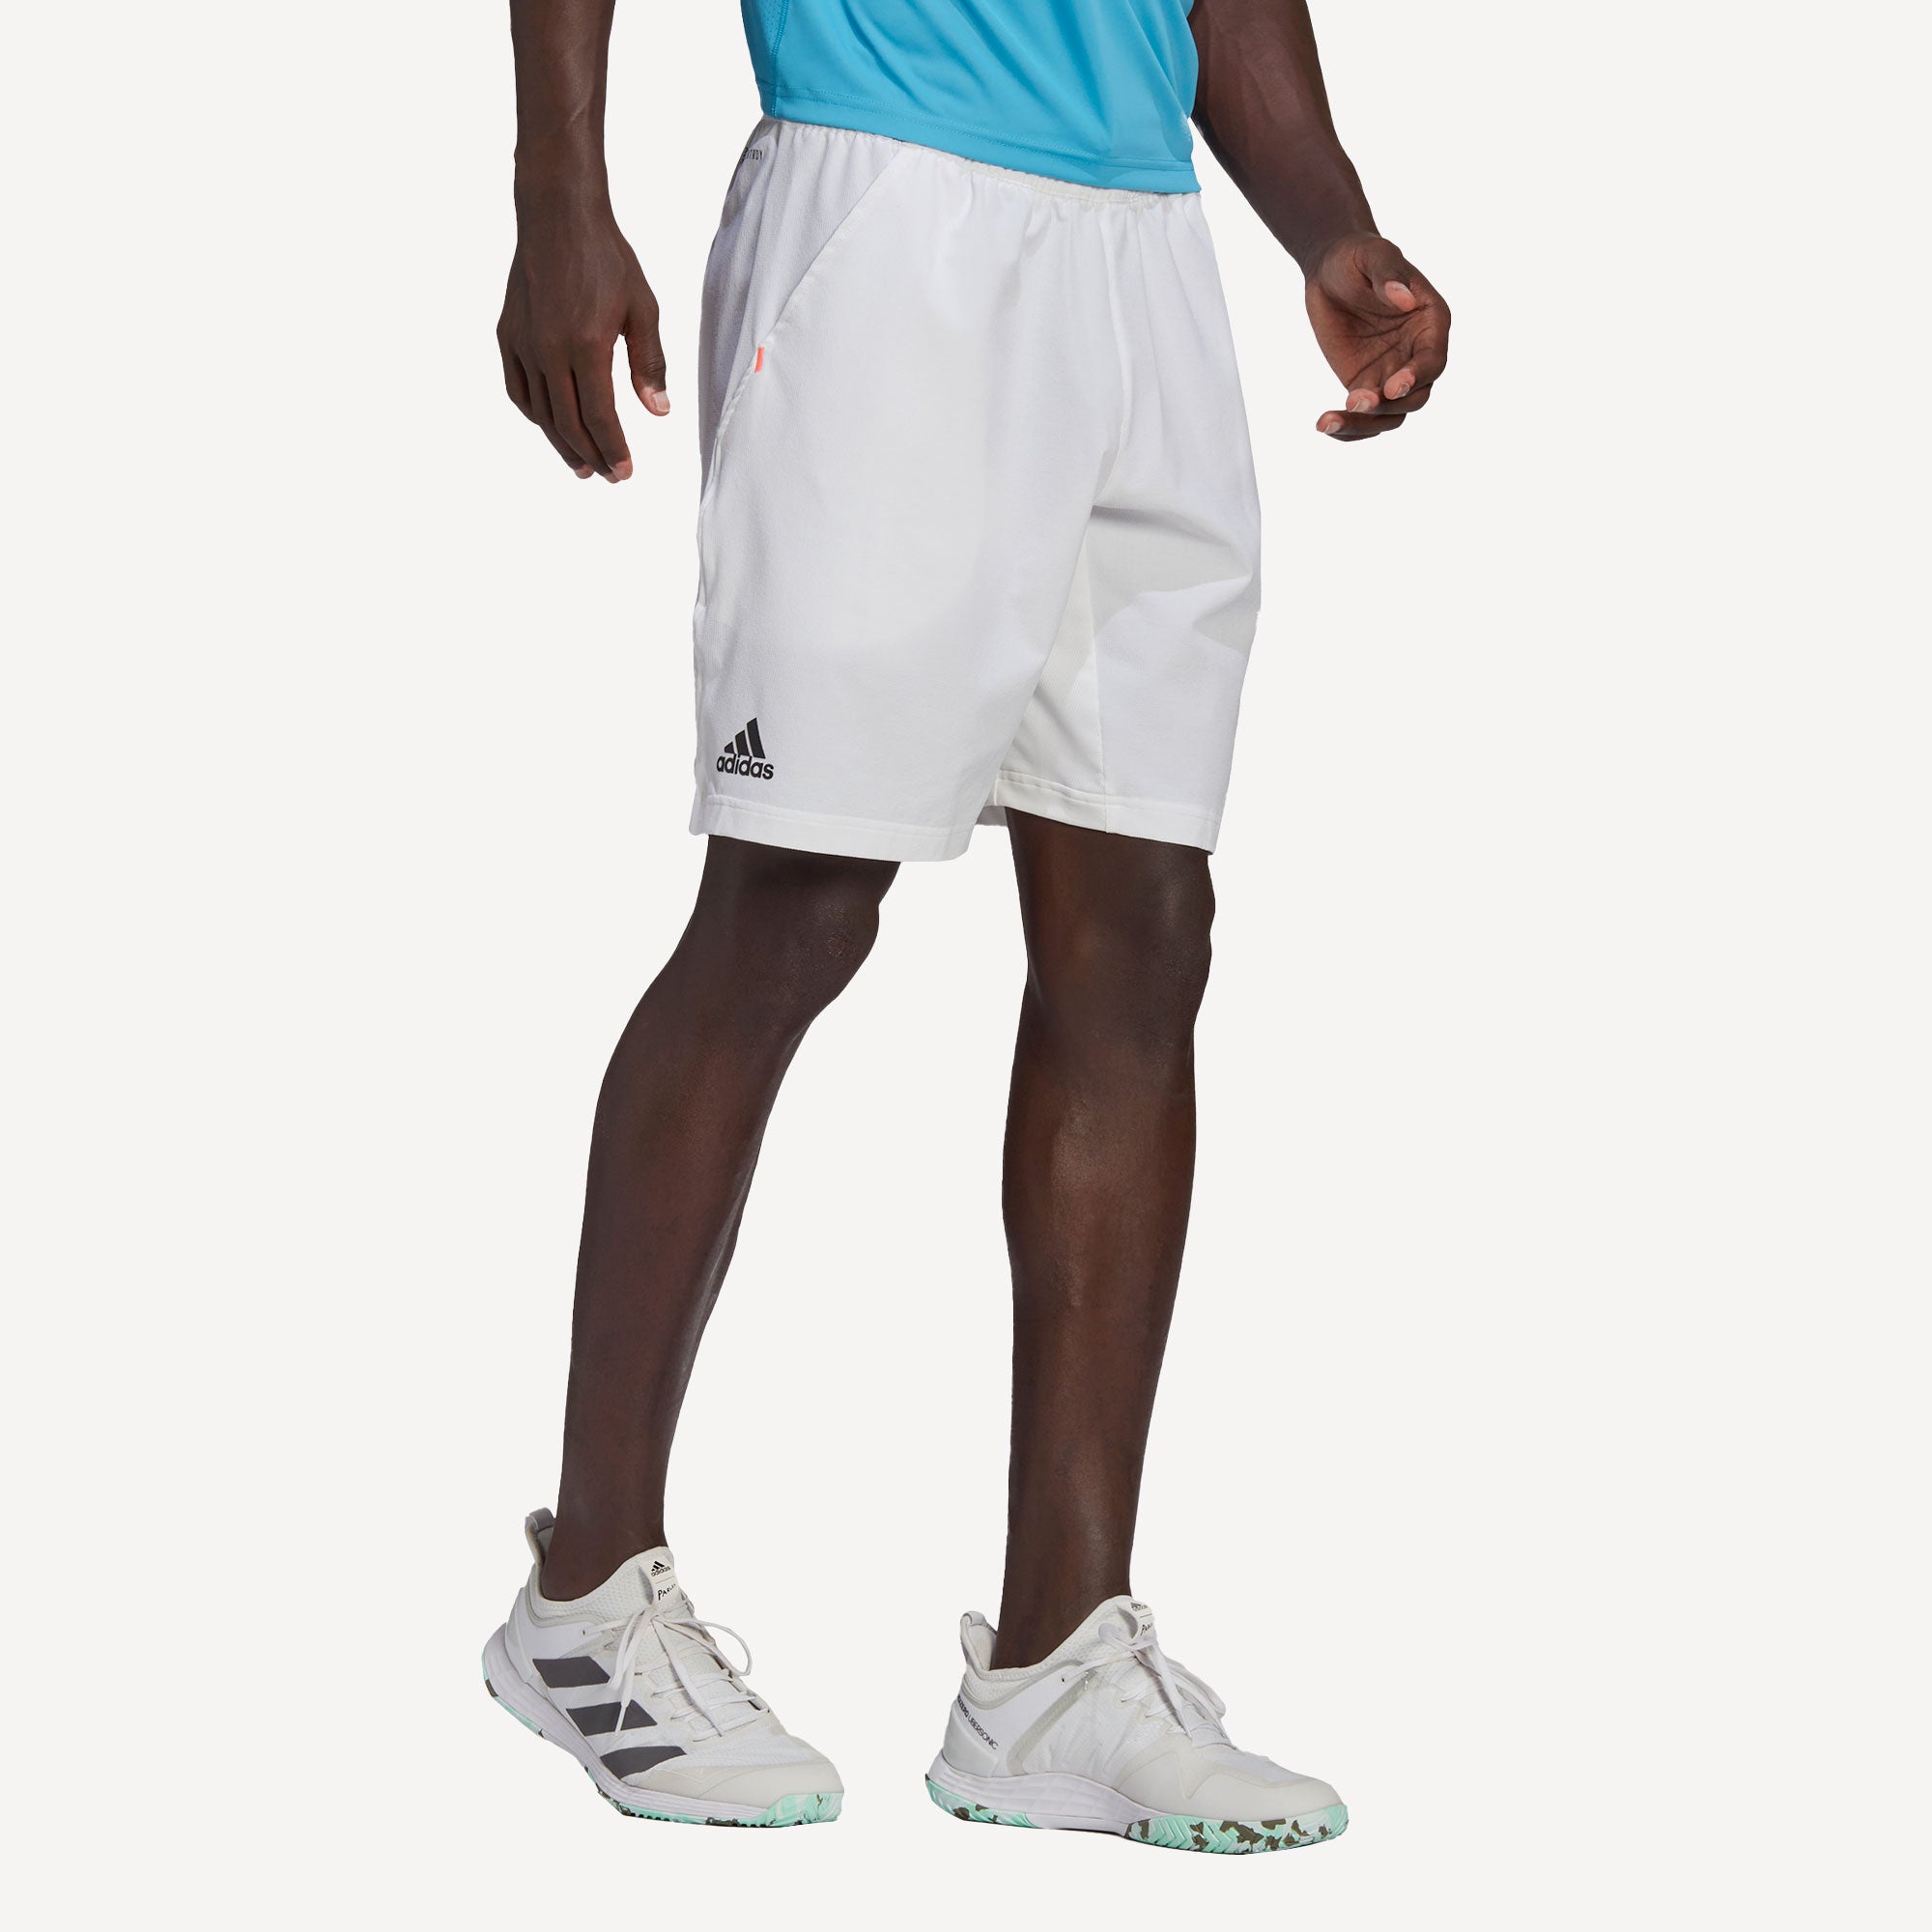 adidas Ergo Men's 9-Inch Tennis Shorts White (1)